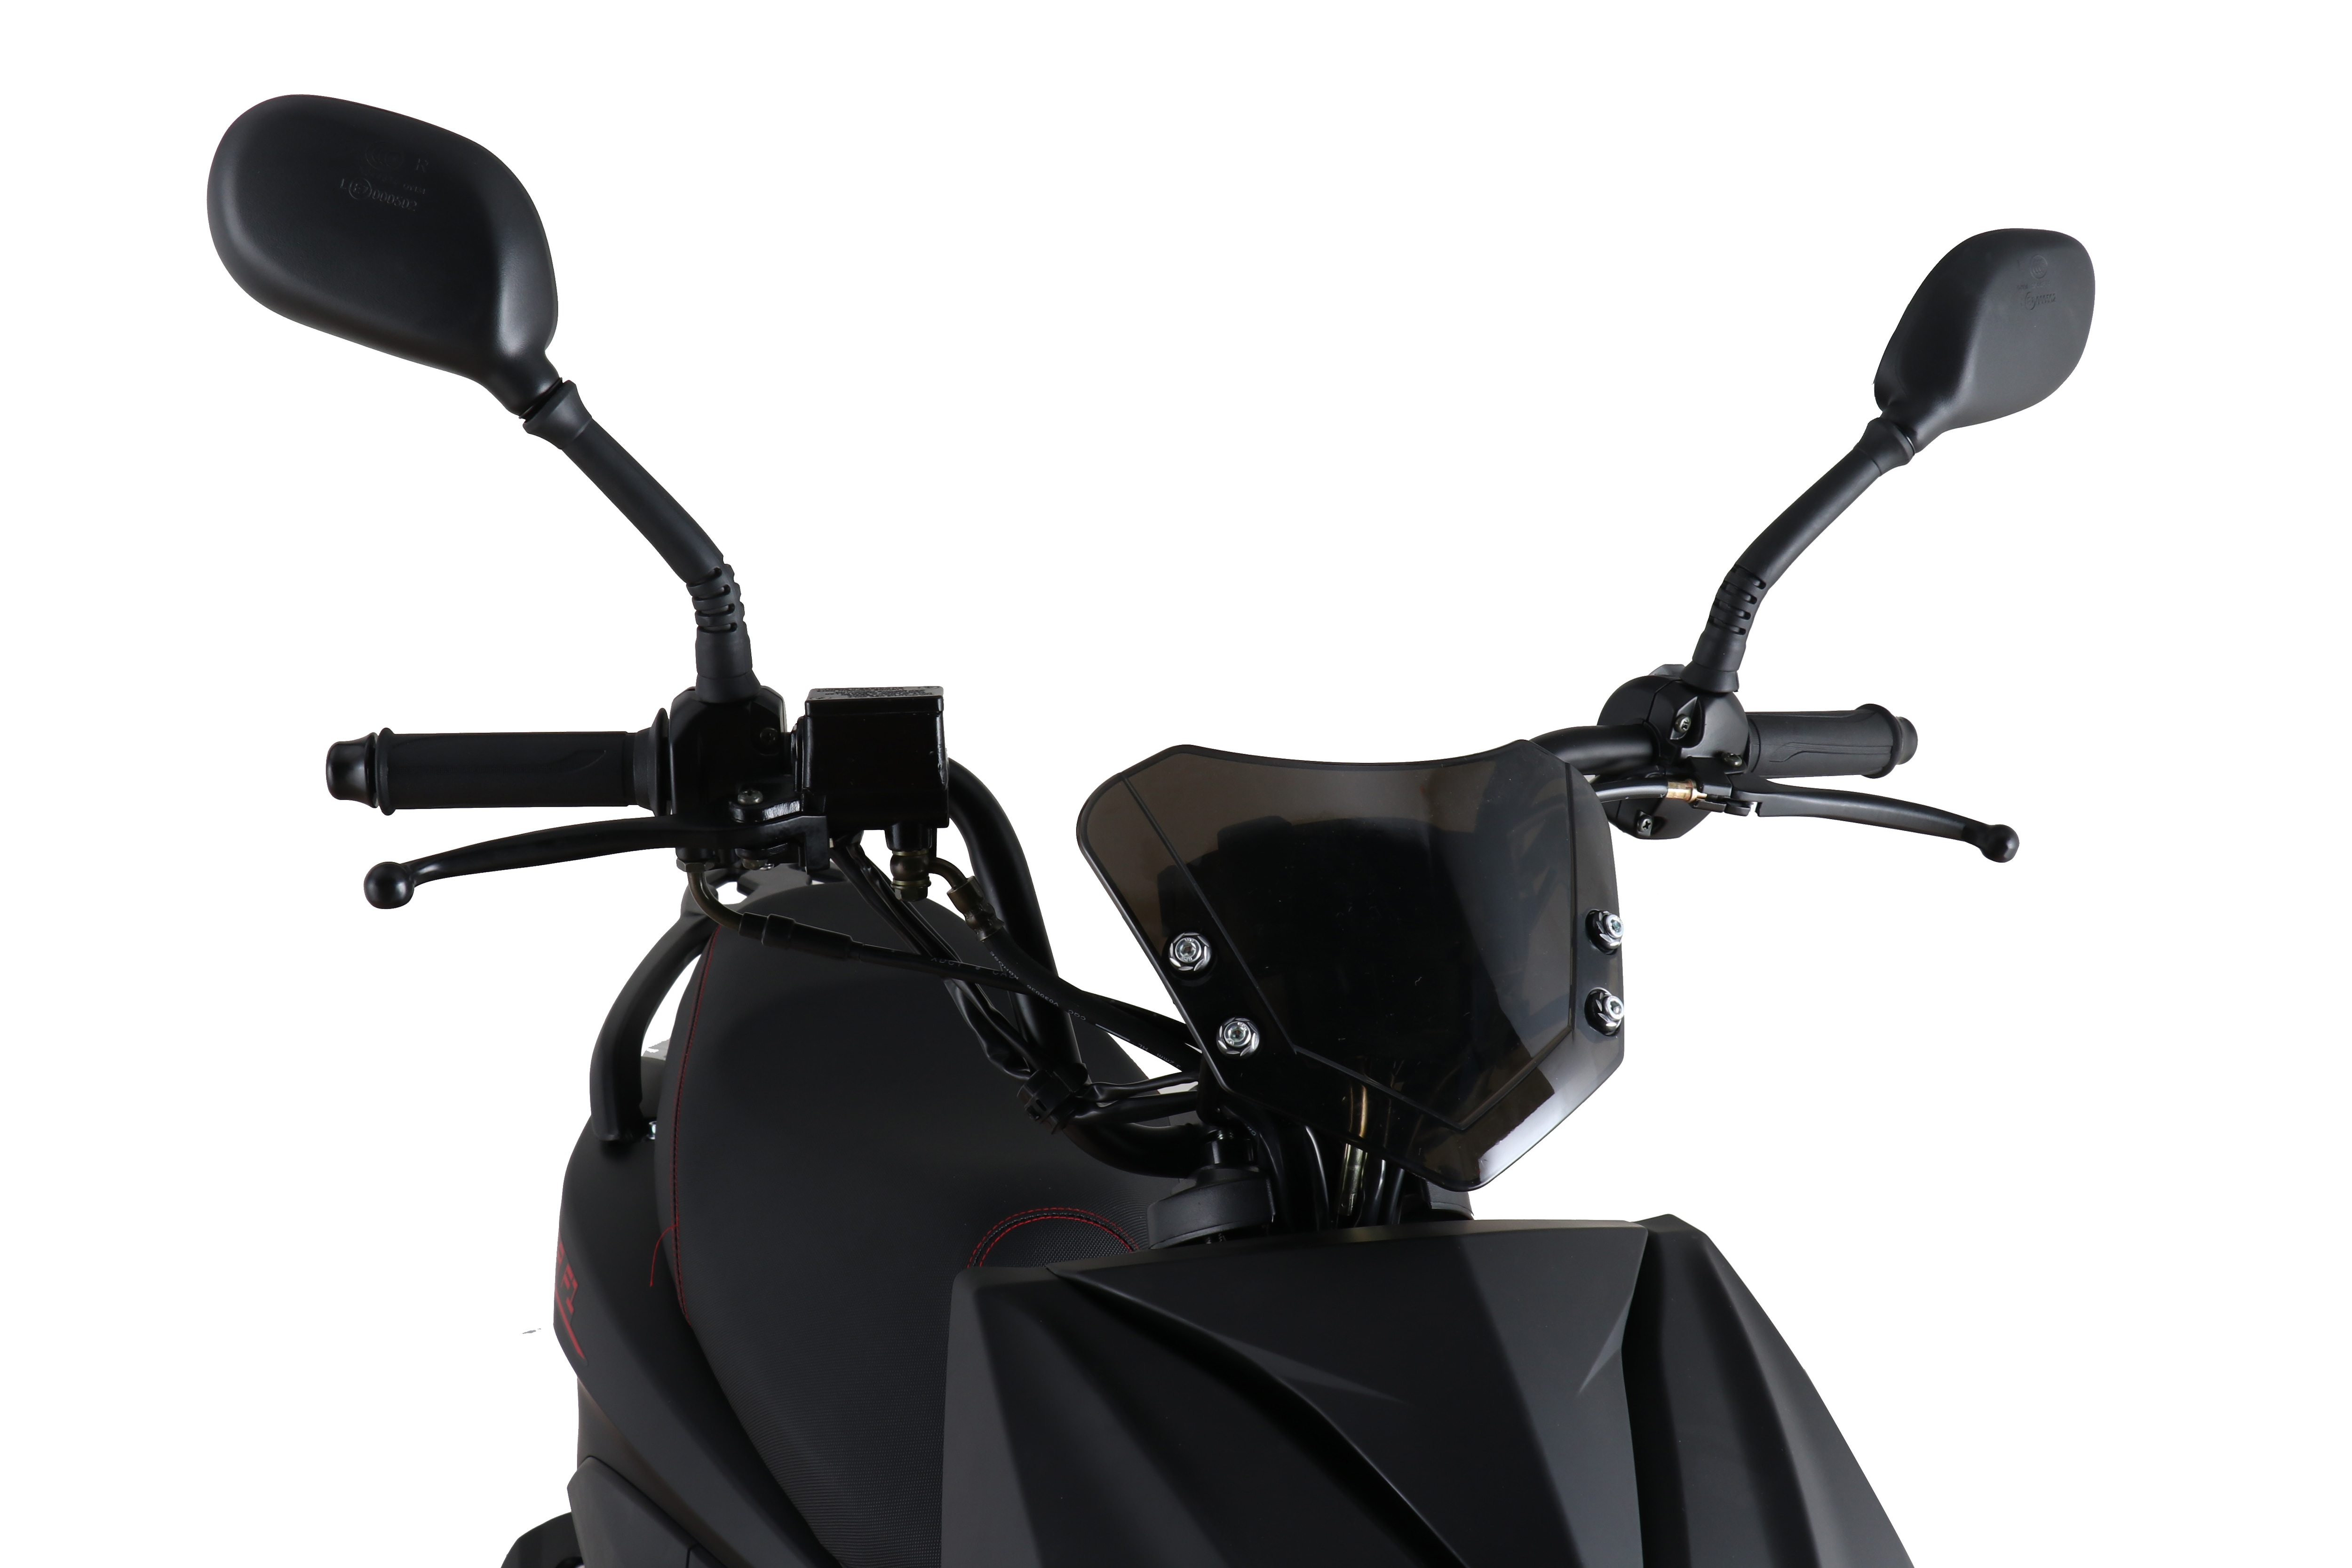 Alpha Motors Motorroller Speedstar 50 EURO 45 mattschwarz online kaufen bei kmh ccm Netto 5